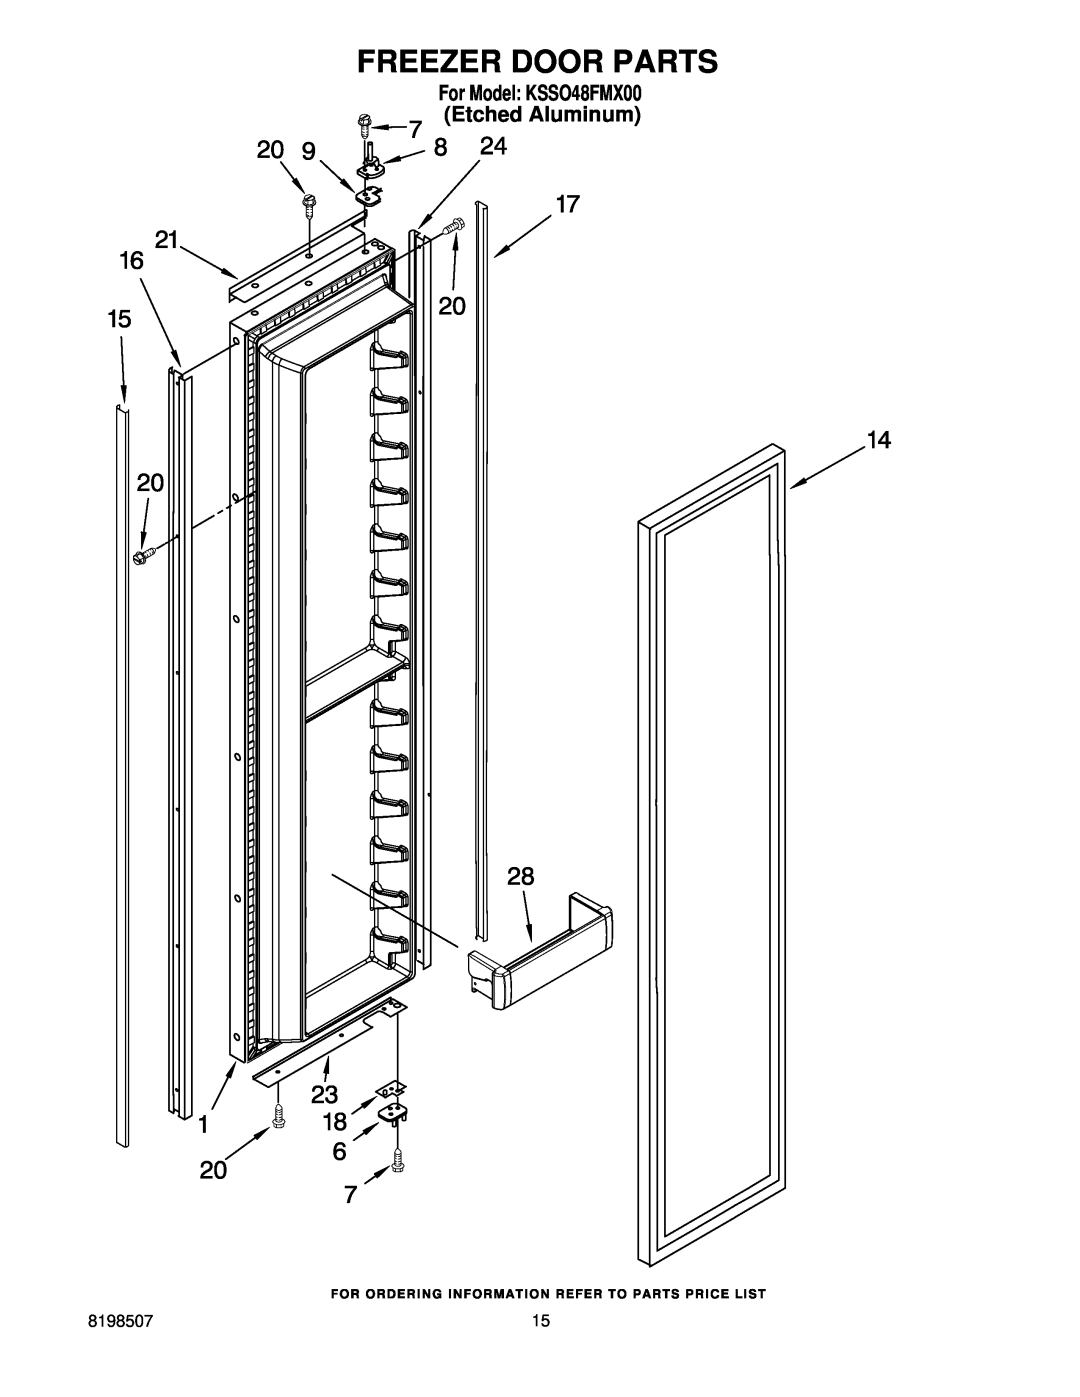 KitchenAid manual Freezer Door Parts, For Model KSSO48FMX00 Etched Aluminum 